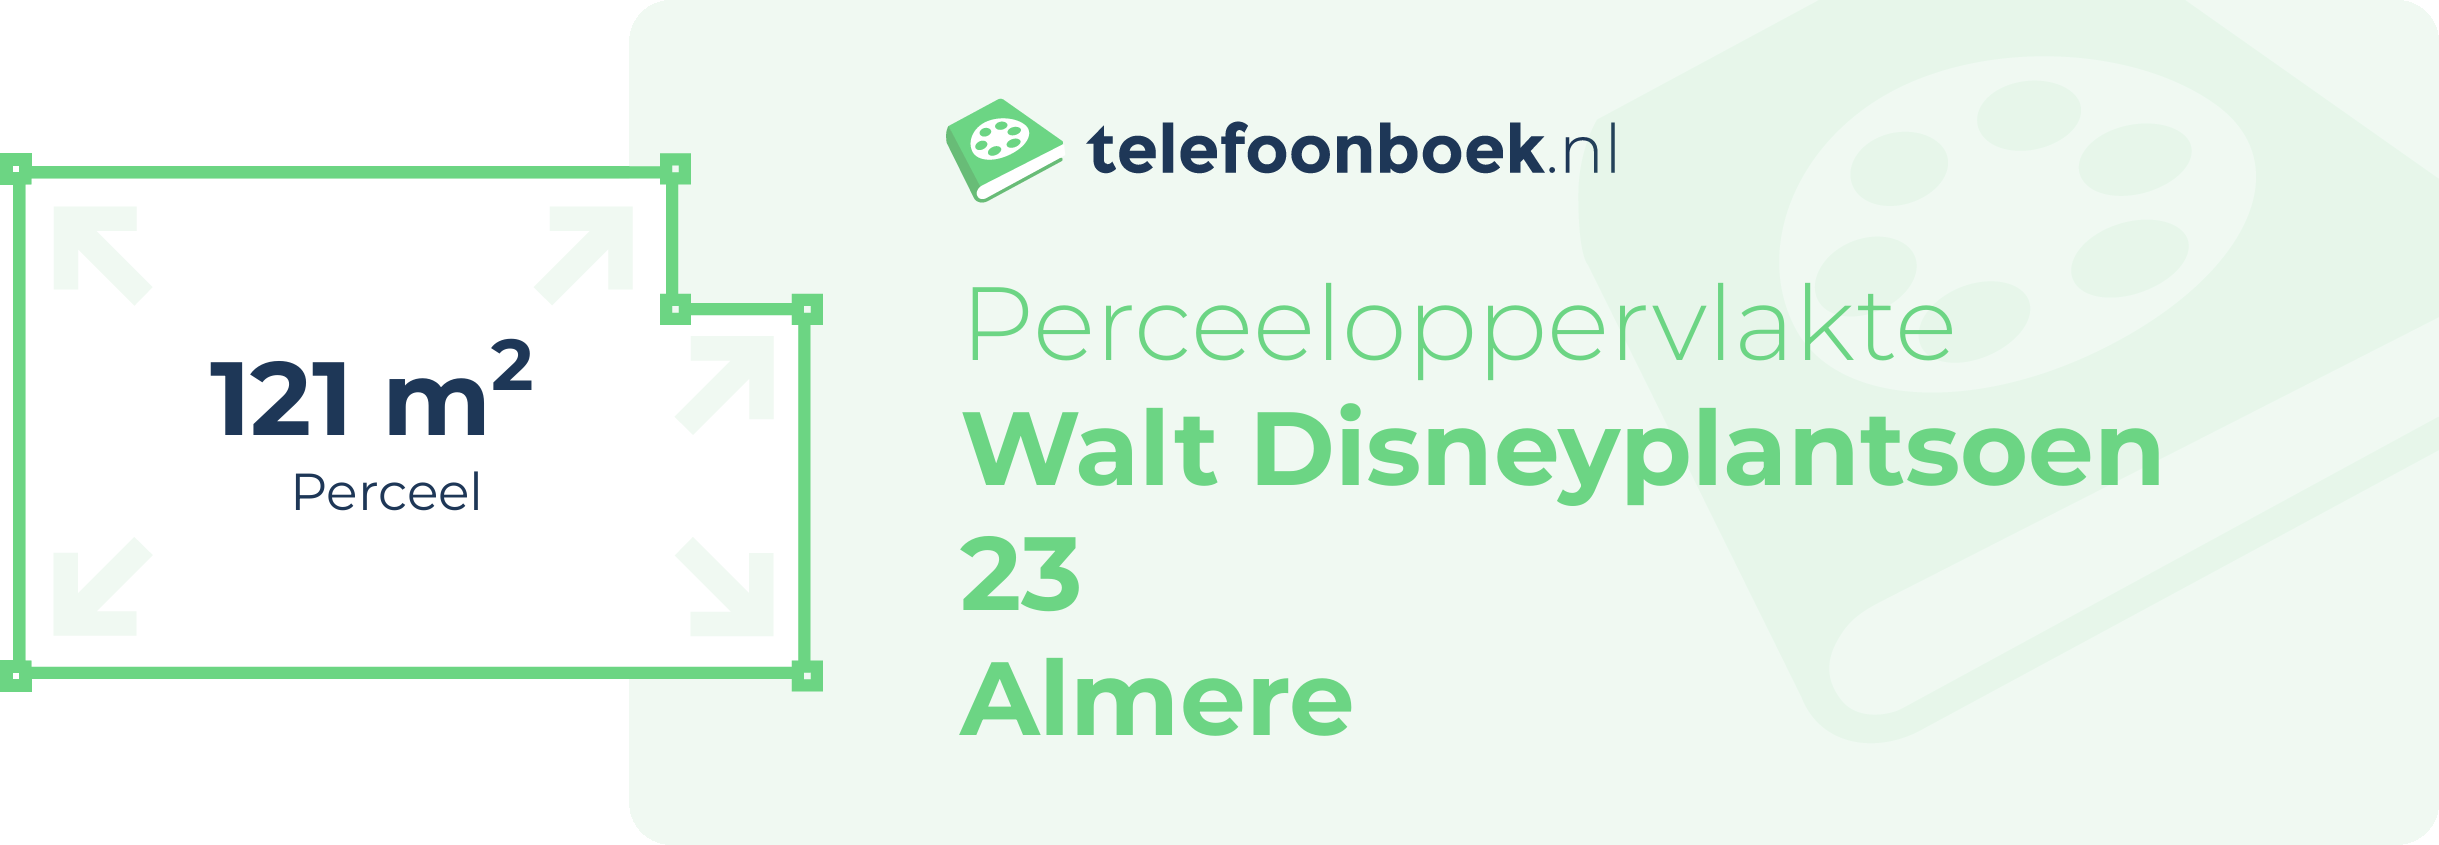 Perceeloppervlakte Walt Disneyplantsoen 23 Almere